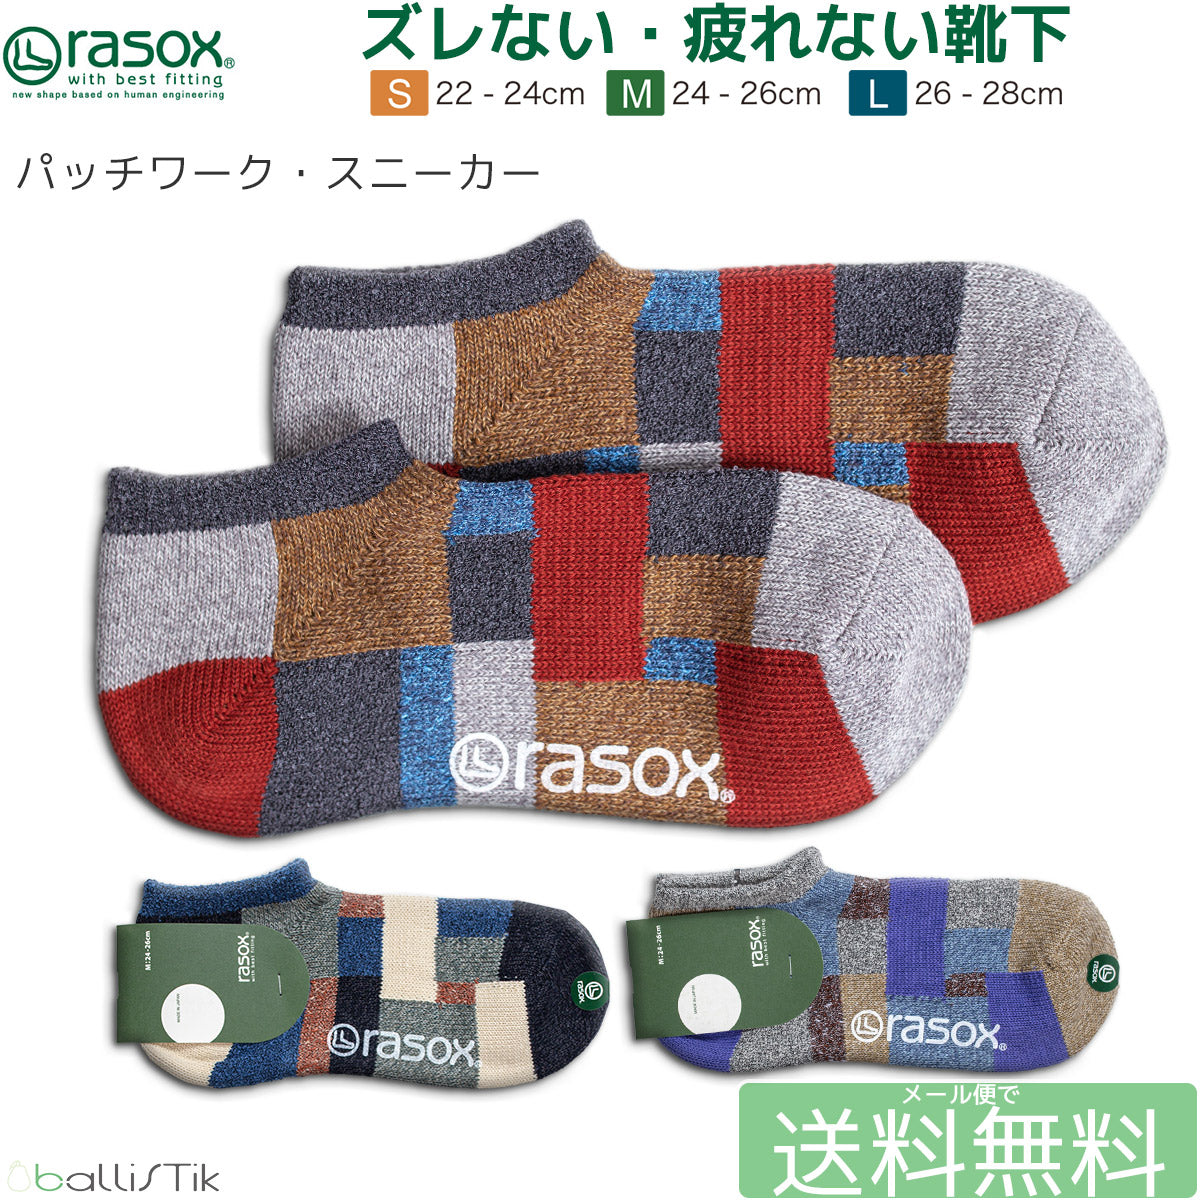 rasox/ラソックス/靴下/スニーカーソックス/ショートソックス/パッチワーク・スニーカー